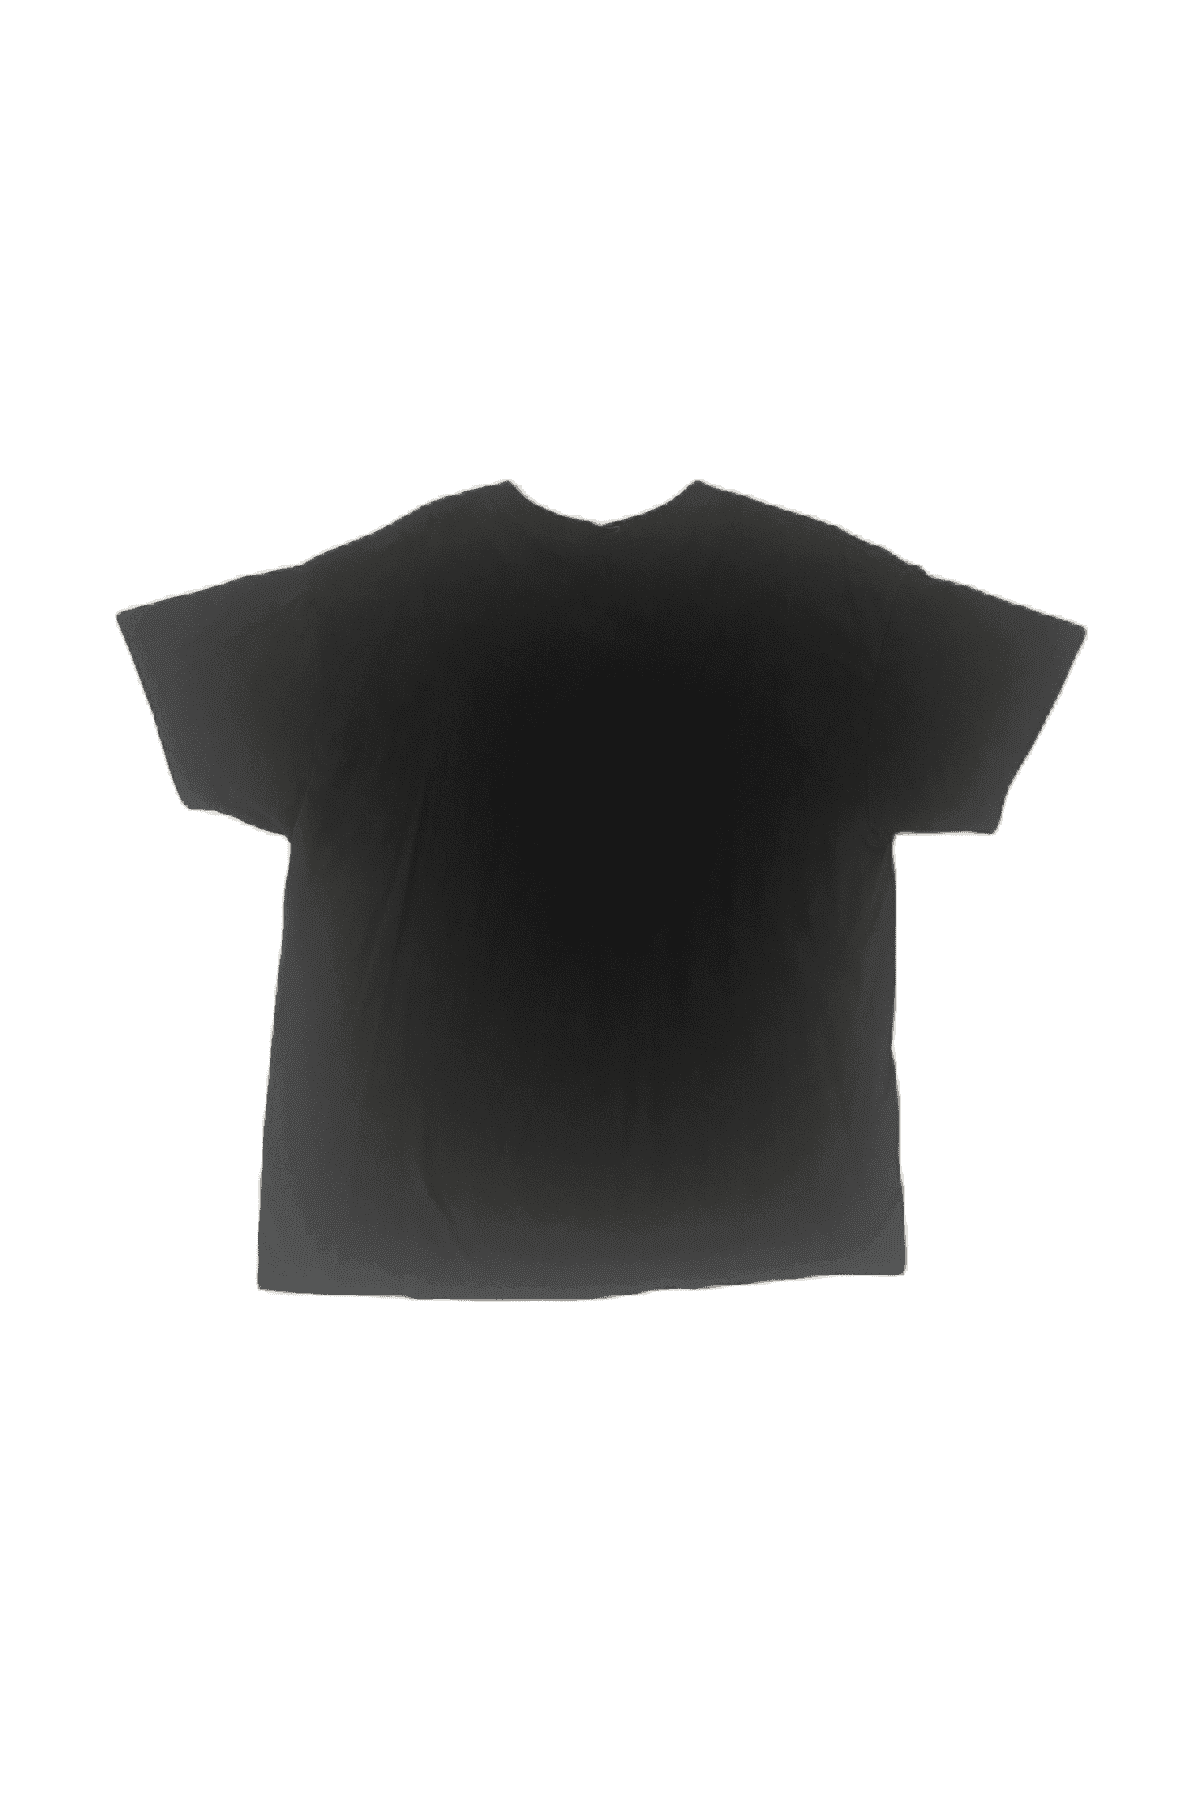 Preloved Nirvana T-Shirt / XL - oh-eco